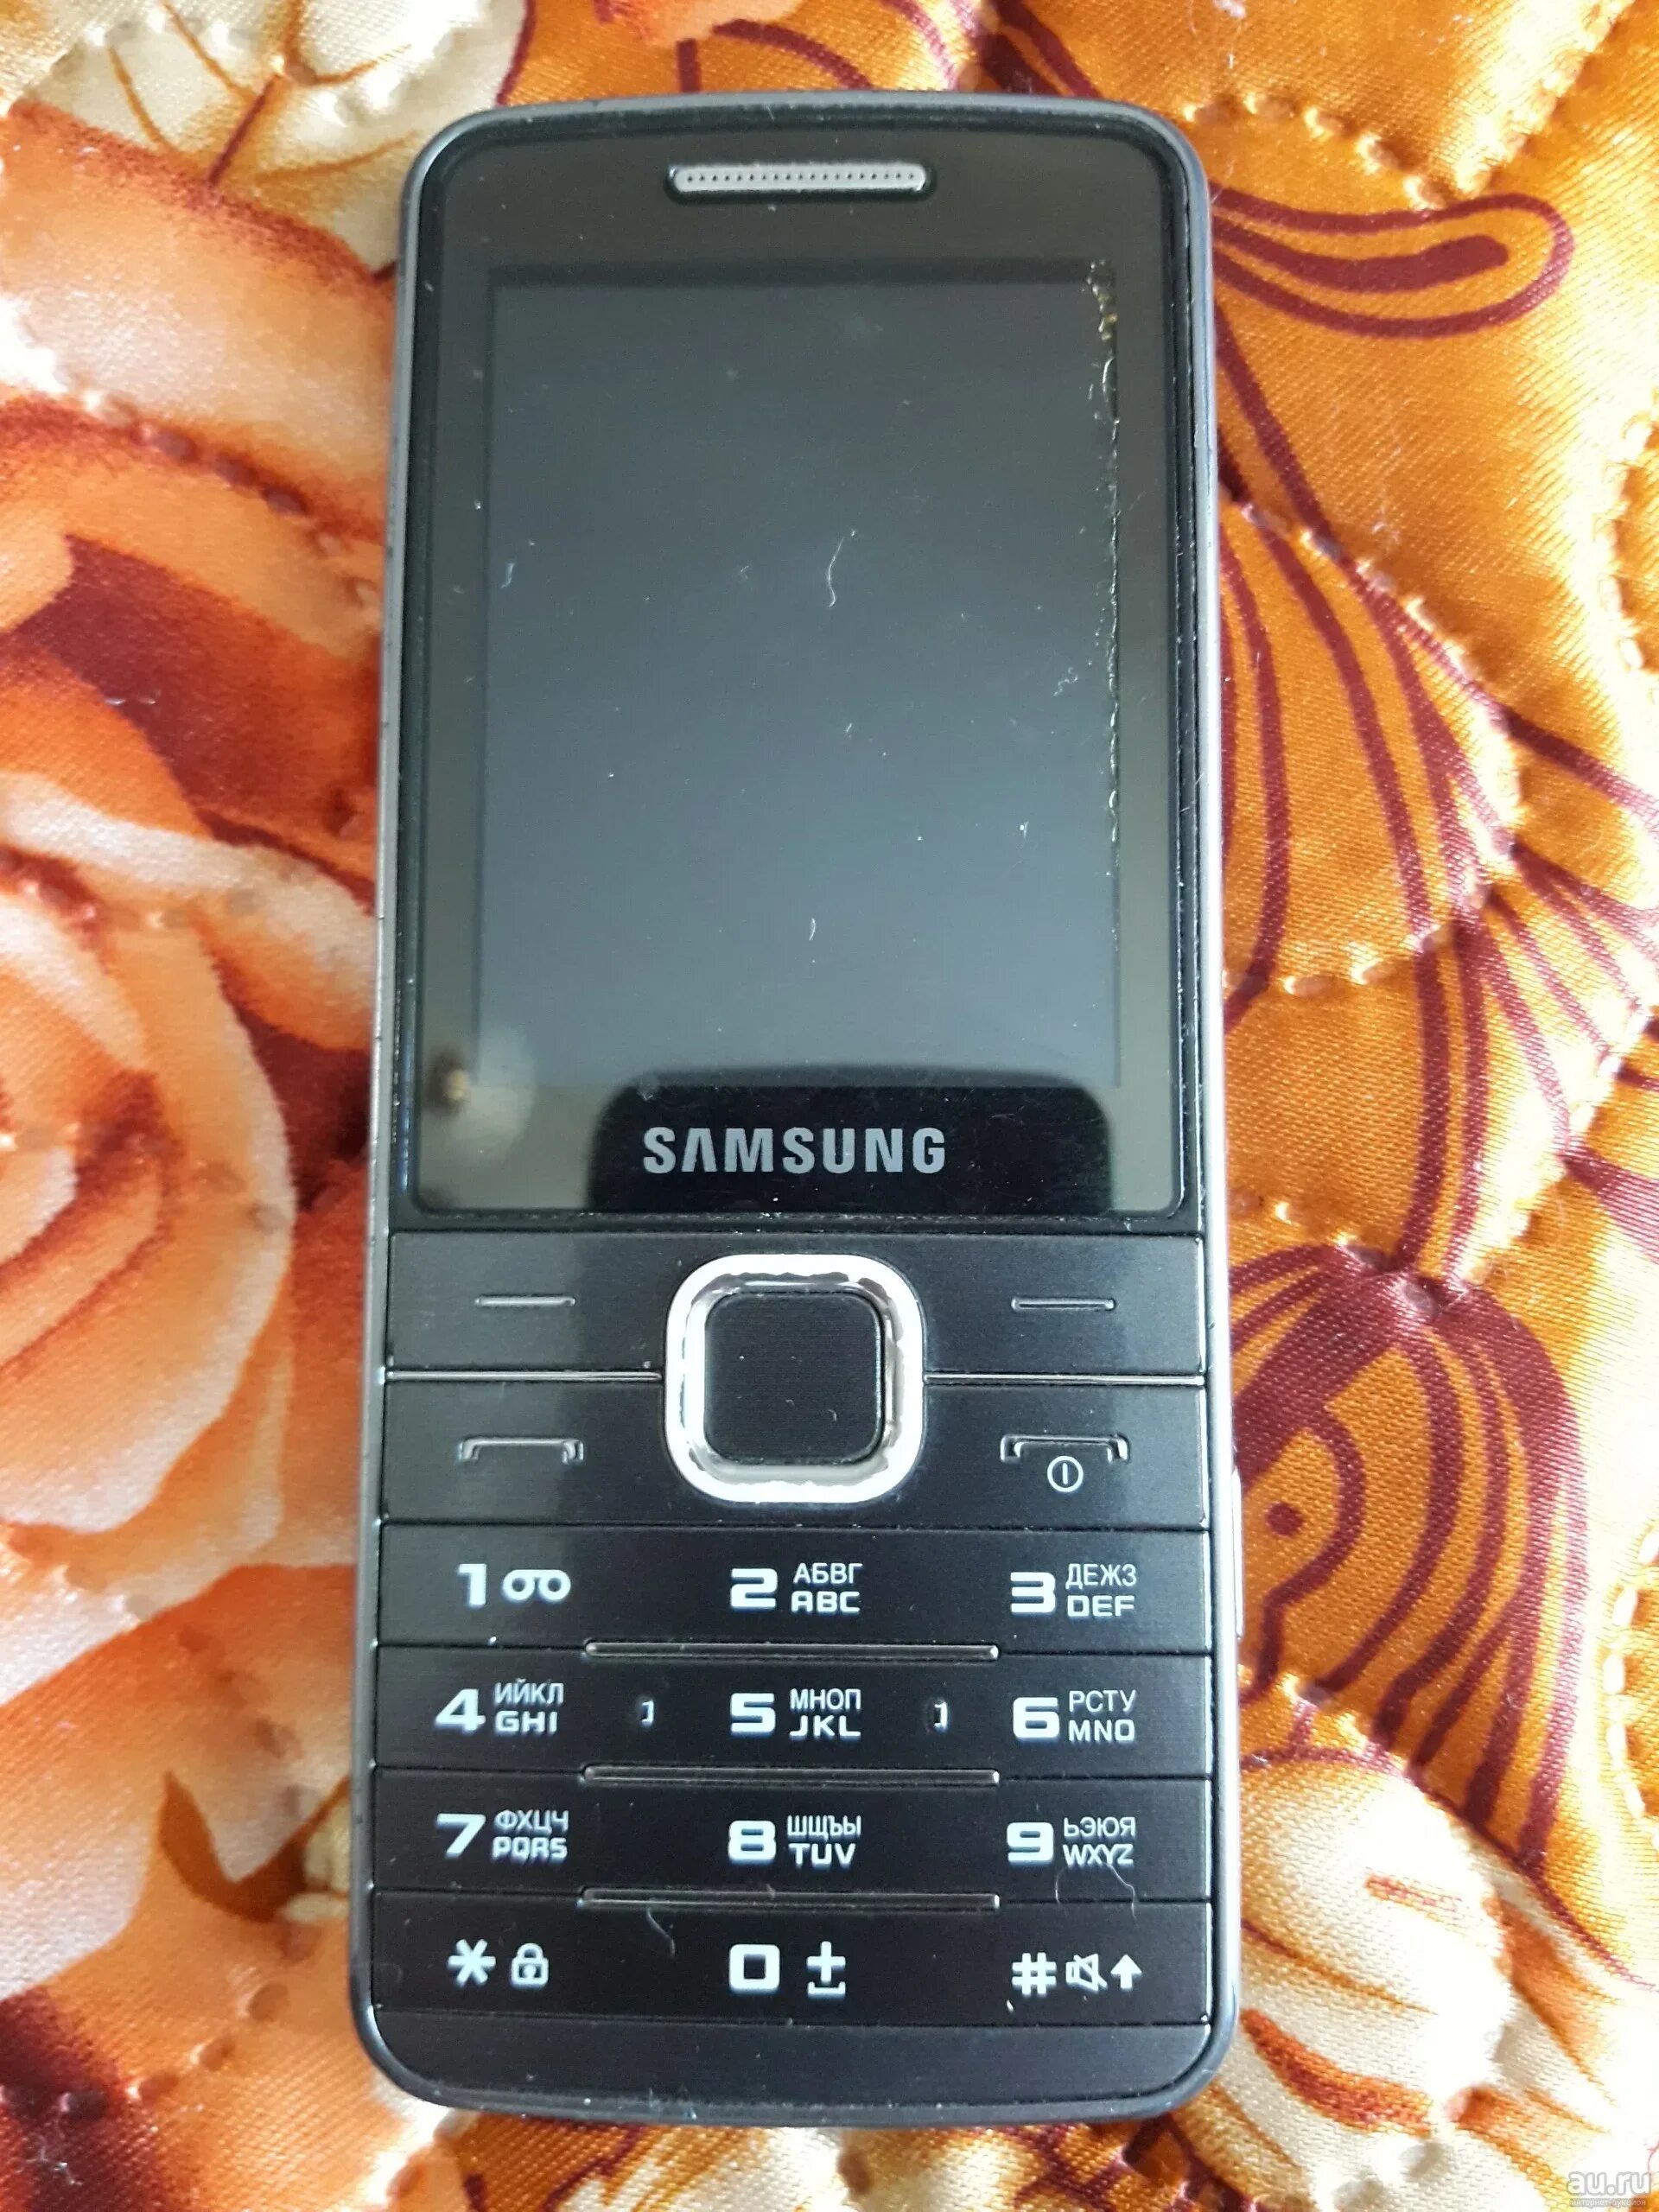 Самсунг 5610. Samsung s5610. Самсунг gt s5610. Сотовый телефон Samsung 5610. Samsung gt-s5610 Black.